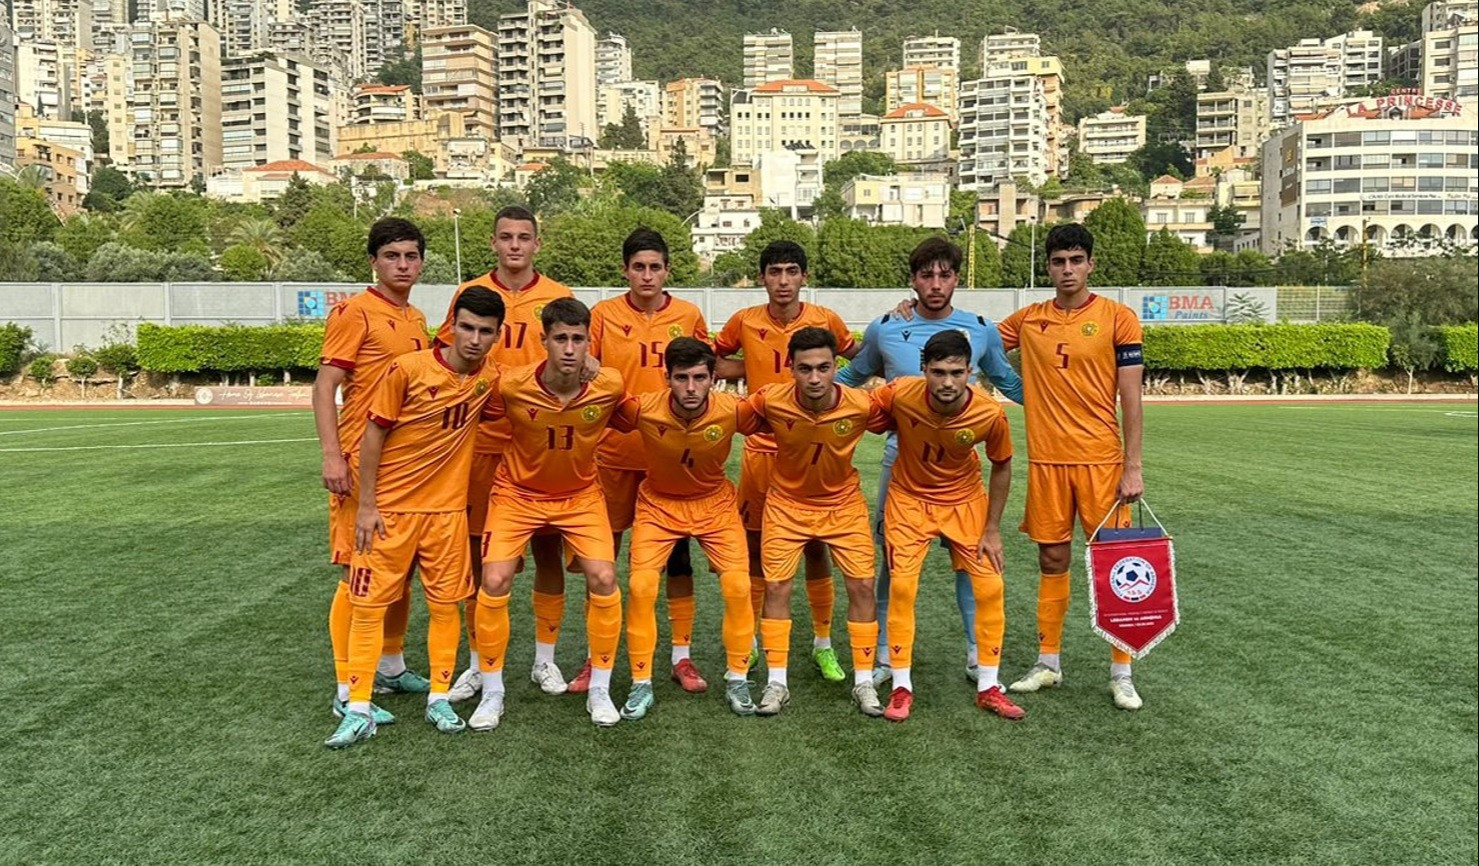 A goalless draw in a match between Armenia U19 and Lebanon U19